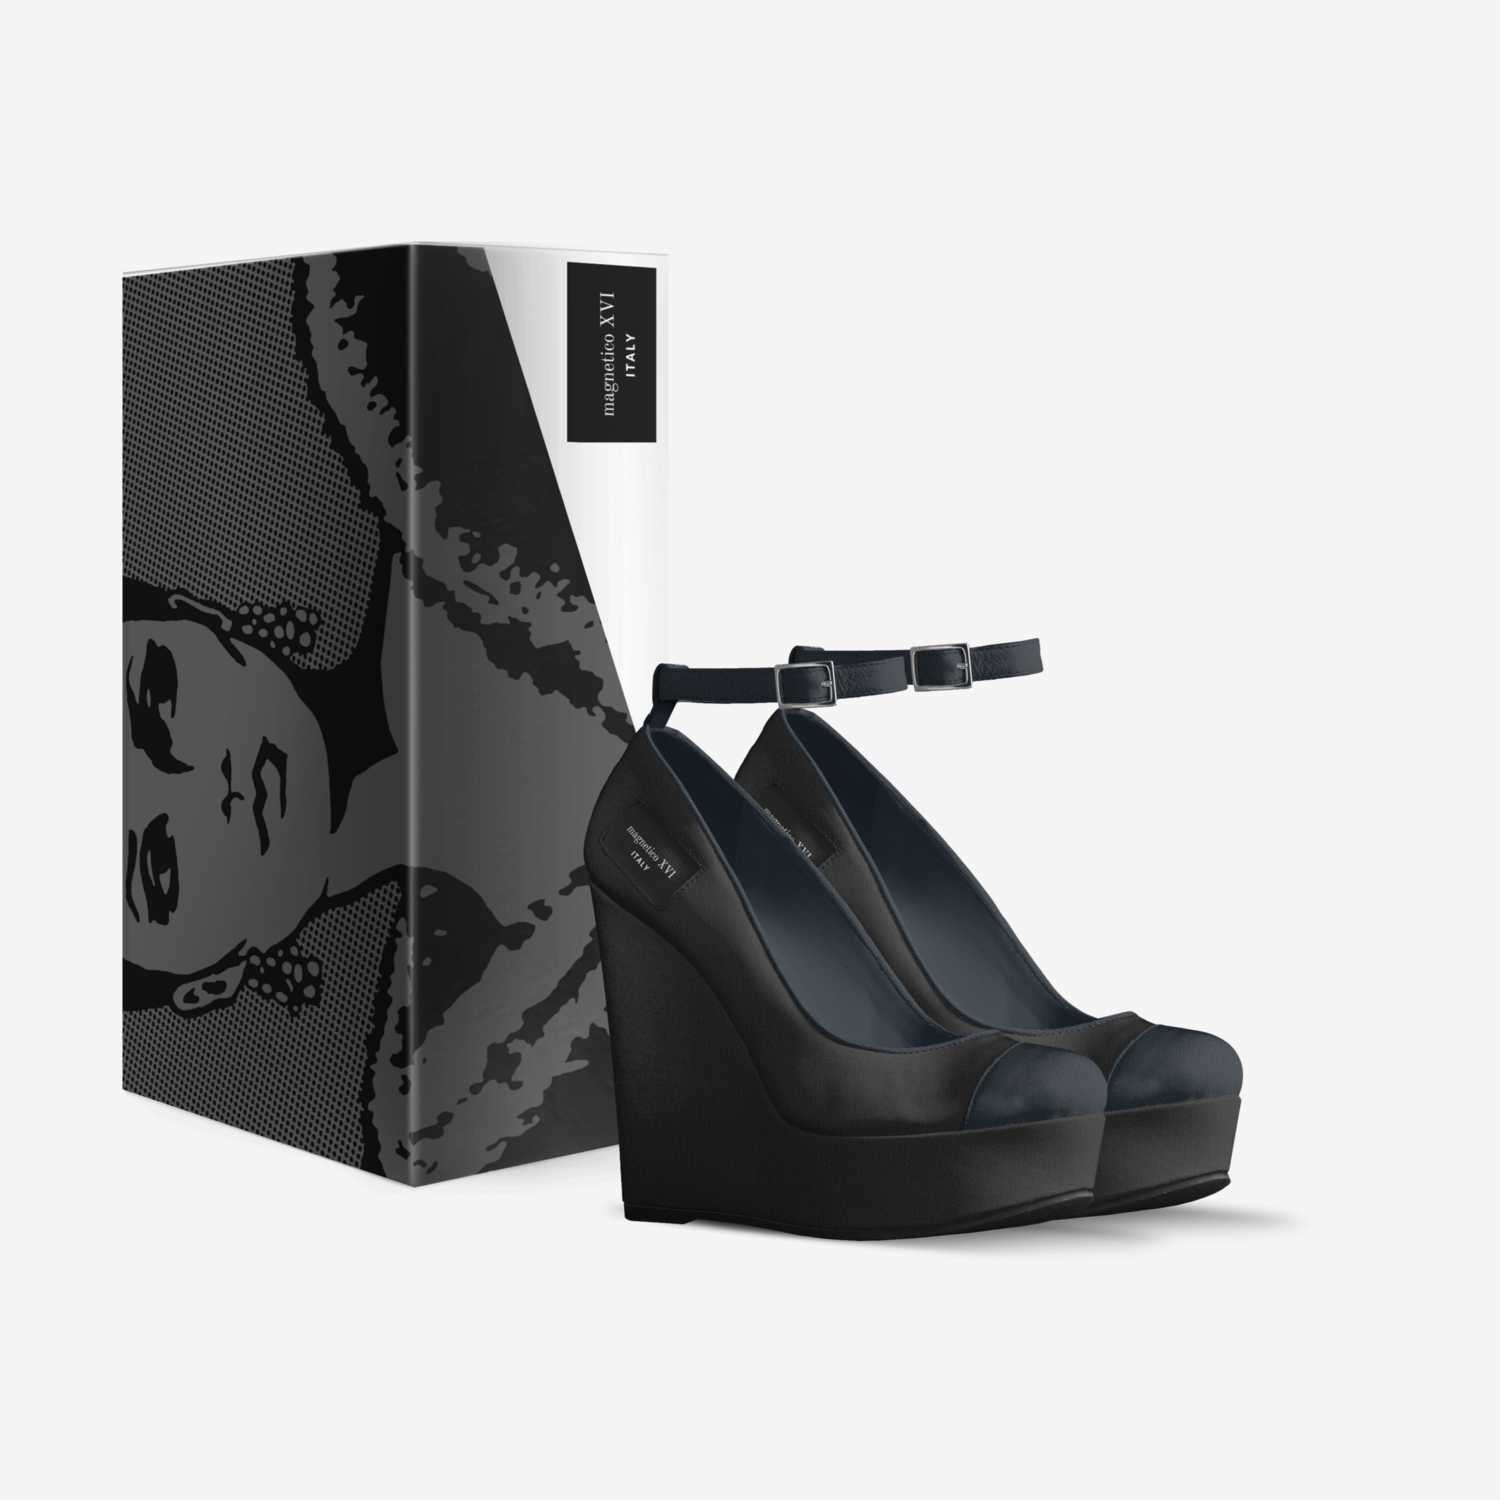 magnetico XVI EBNY custom made in Italy shoes by Jesús Sandoval | Box view